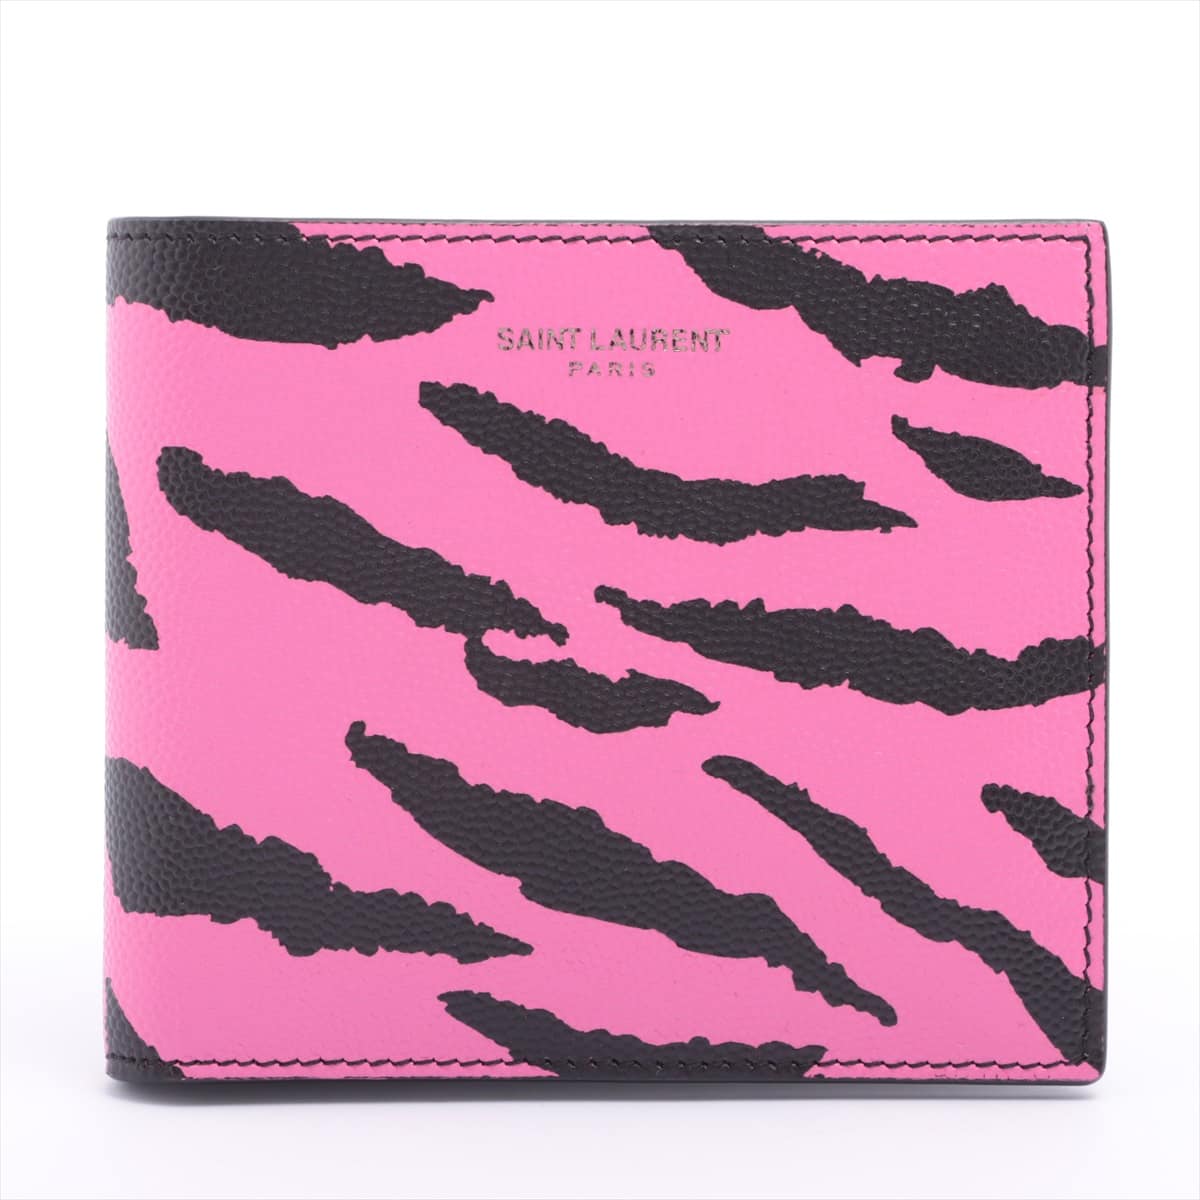 Saint Laurent 396307 Leather Compact Wallet Pink